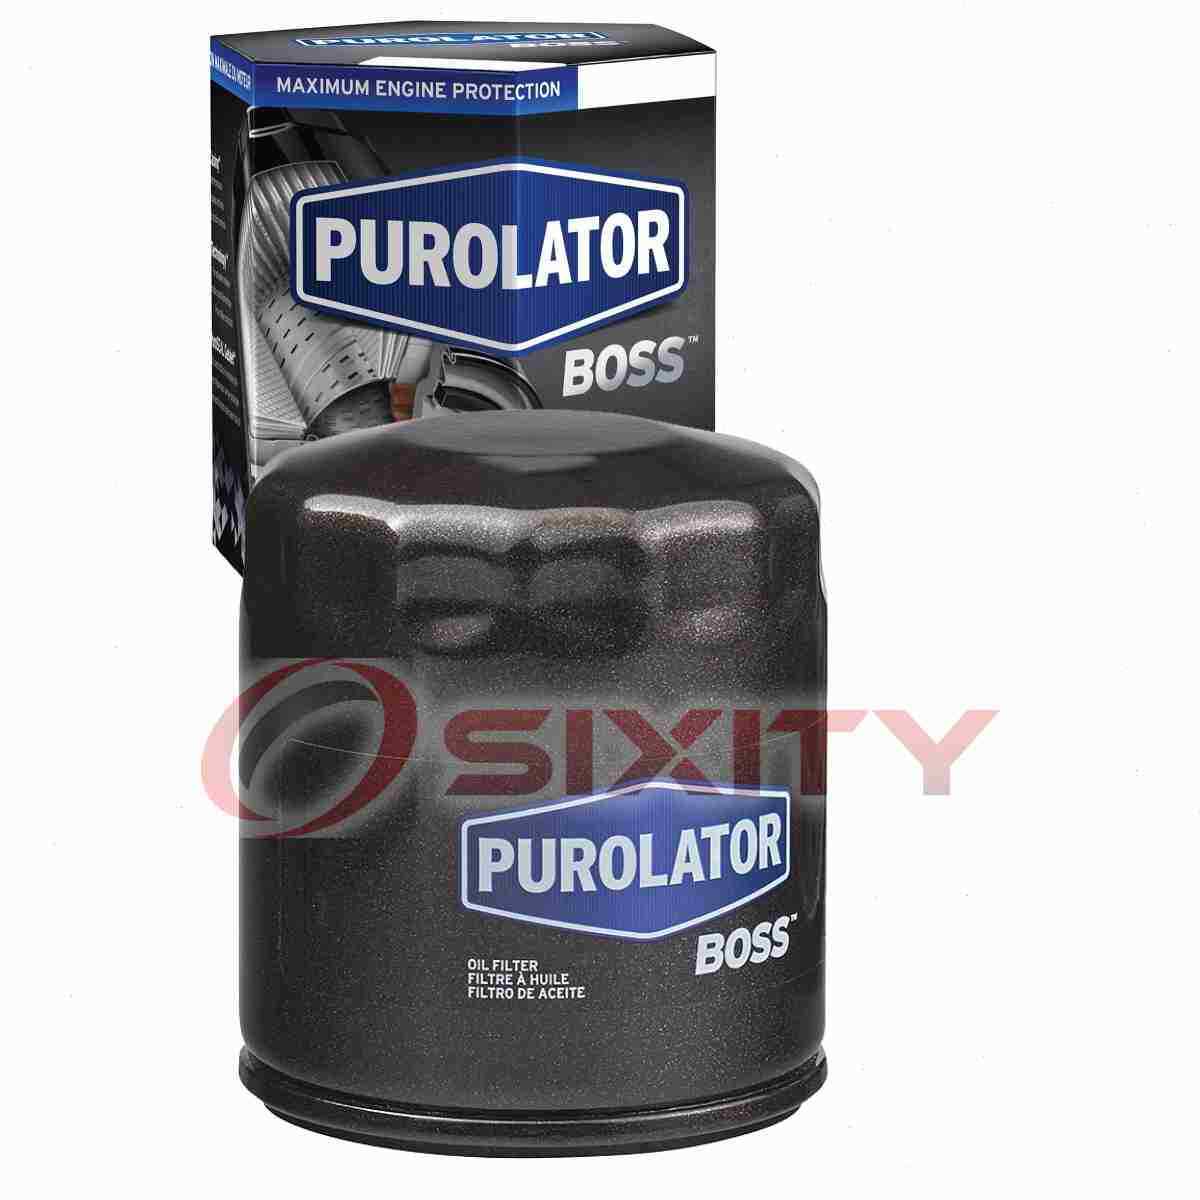 Purolator BOSS Engine Oil Filter for 2008-2010 Hummer H3 Oil Change wq